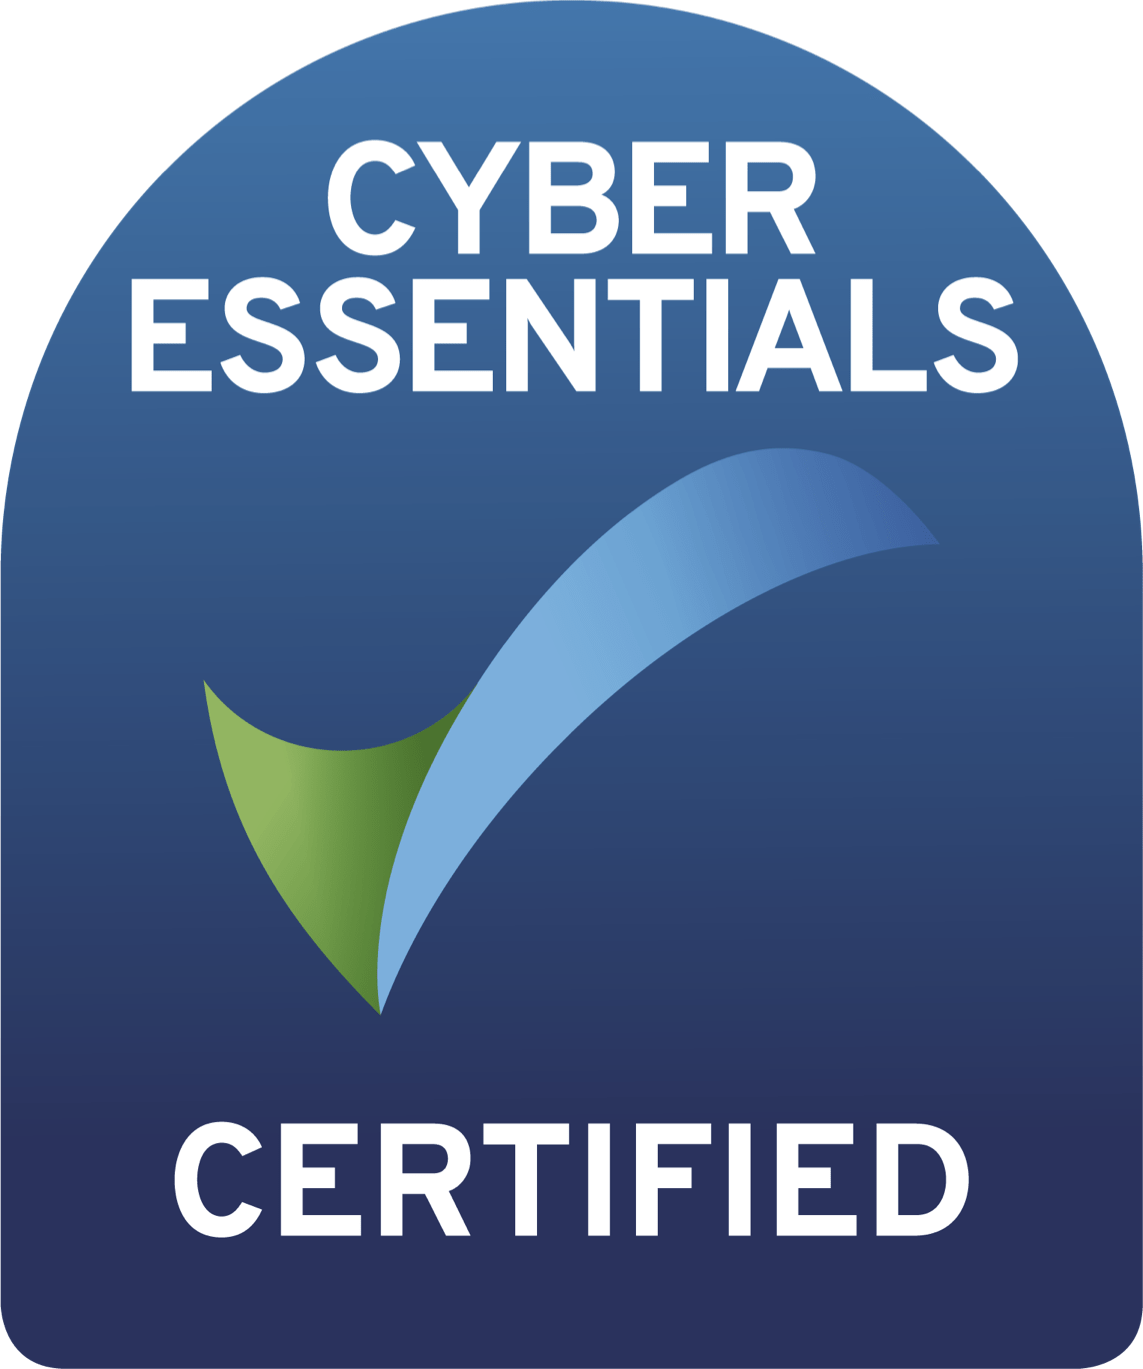 cyberessentials_trademark_4C